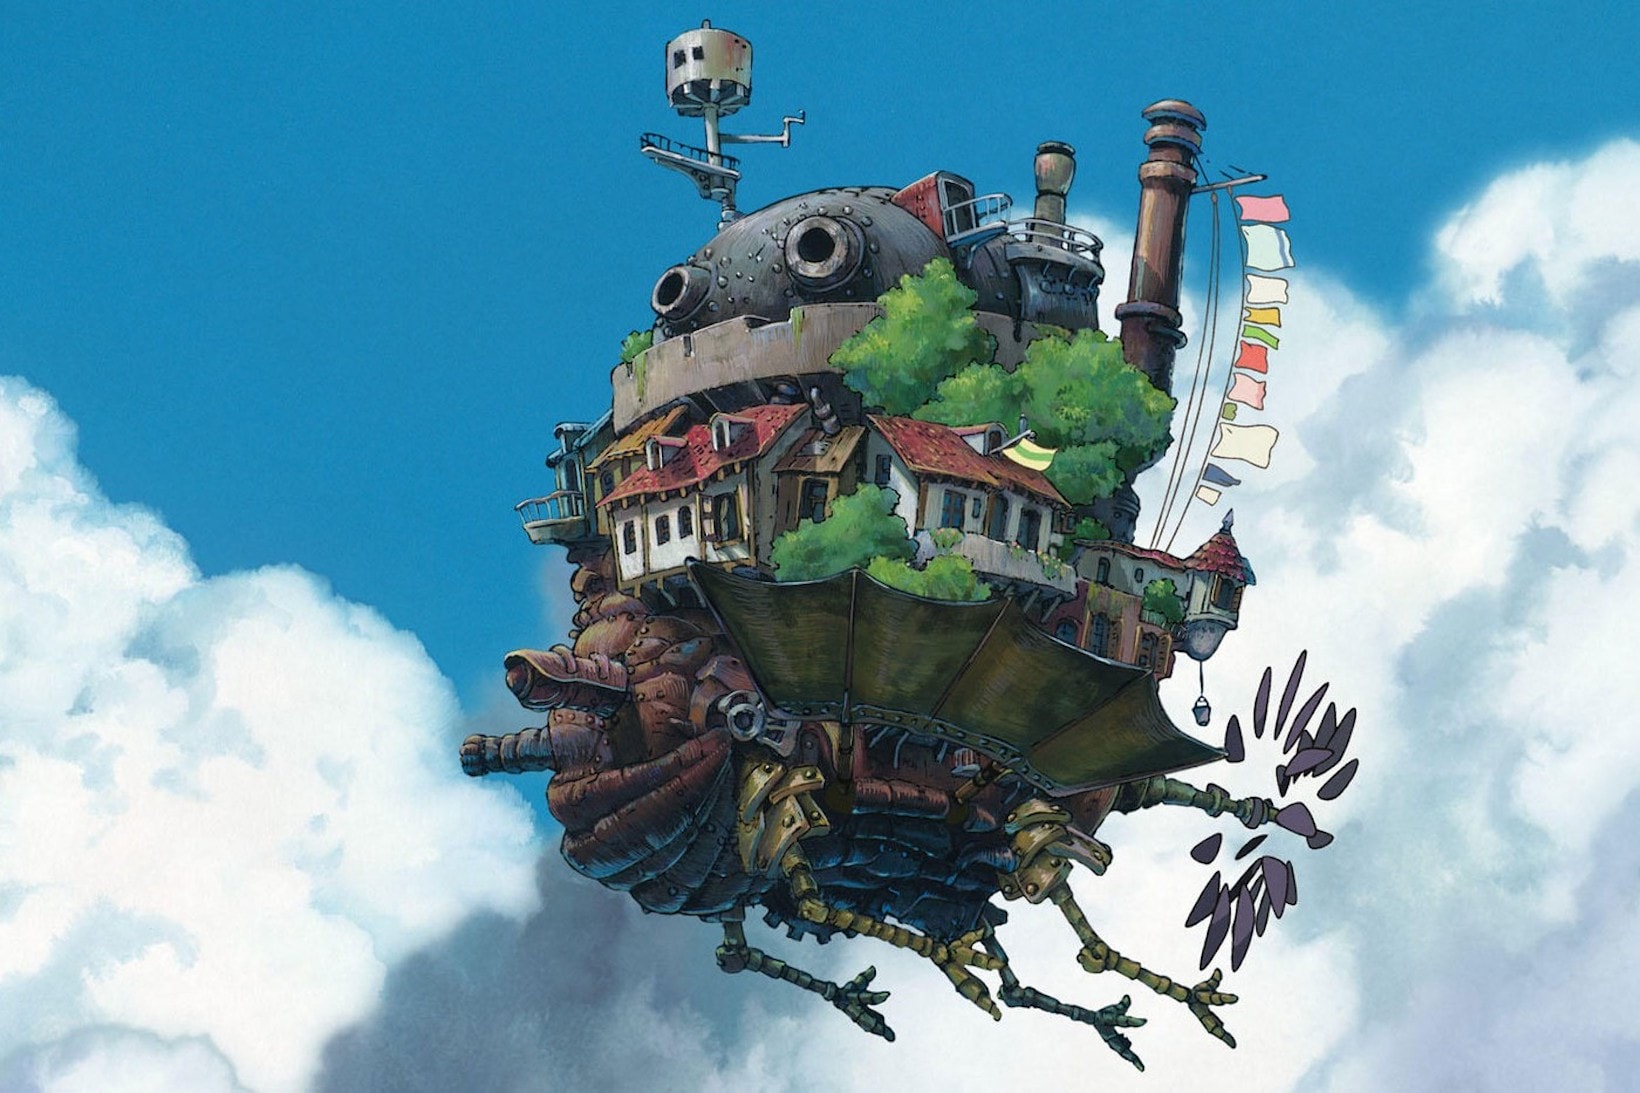 studio ghibli theme park howls moving castle replica real life first look hayao miyazaki